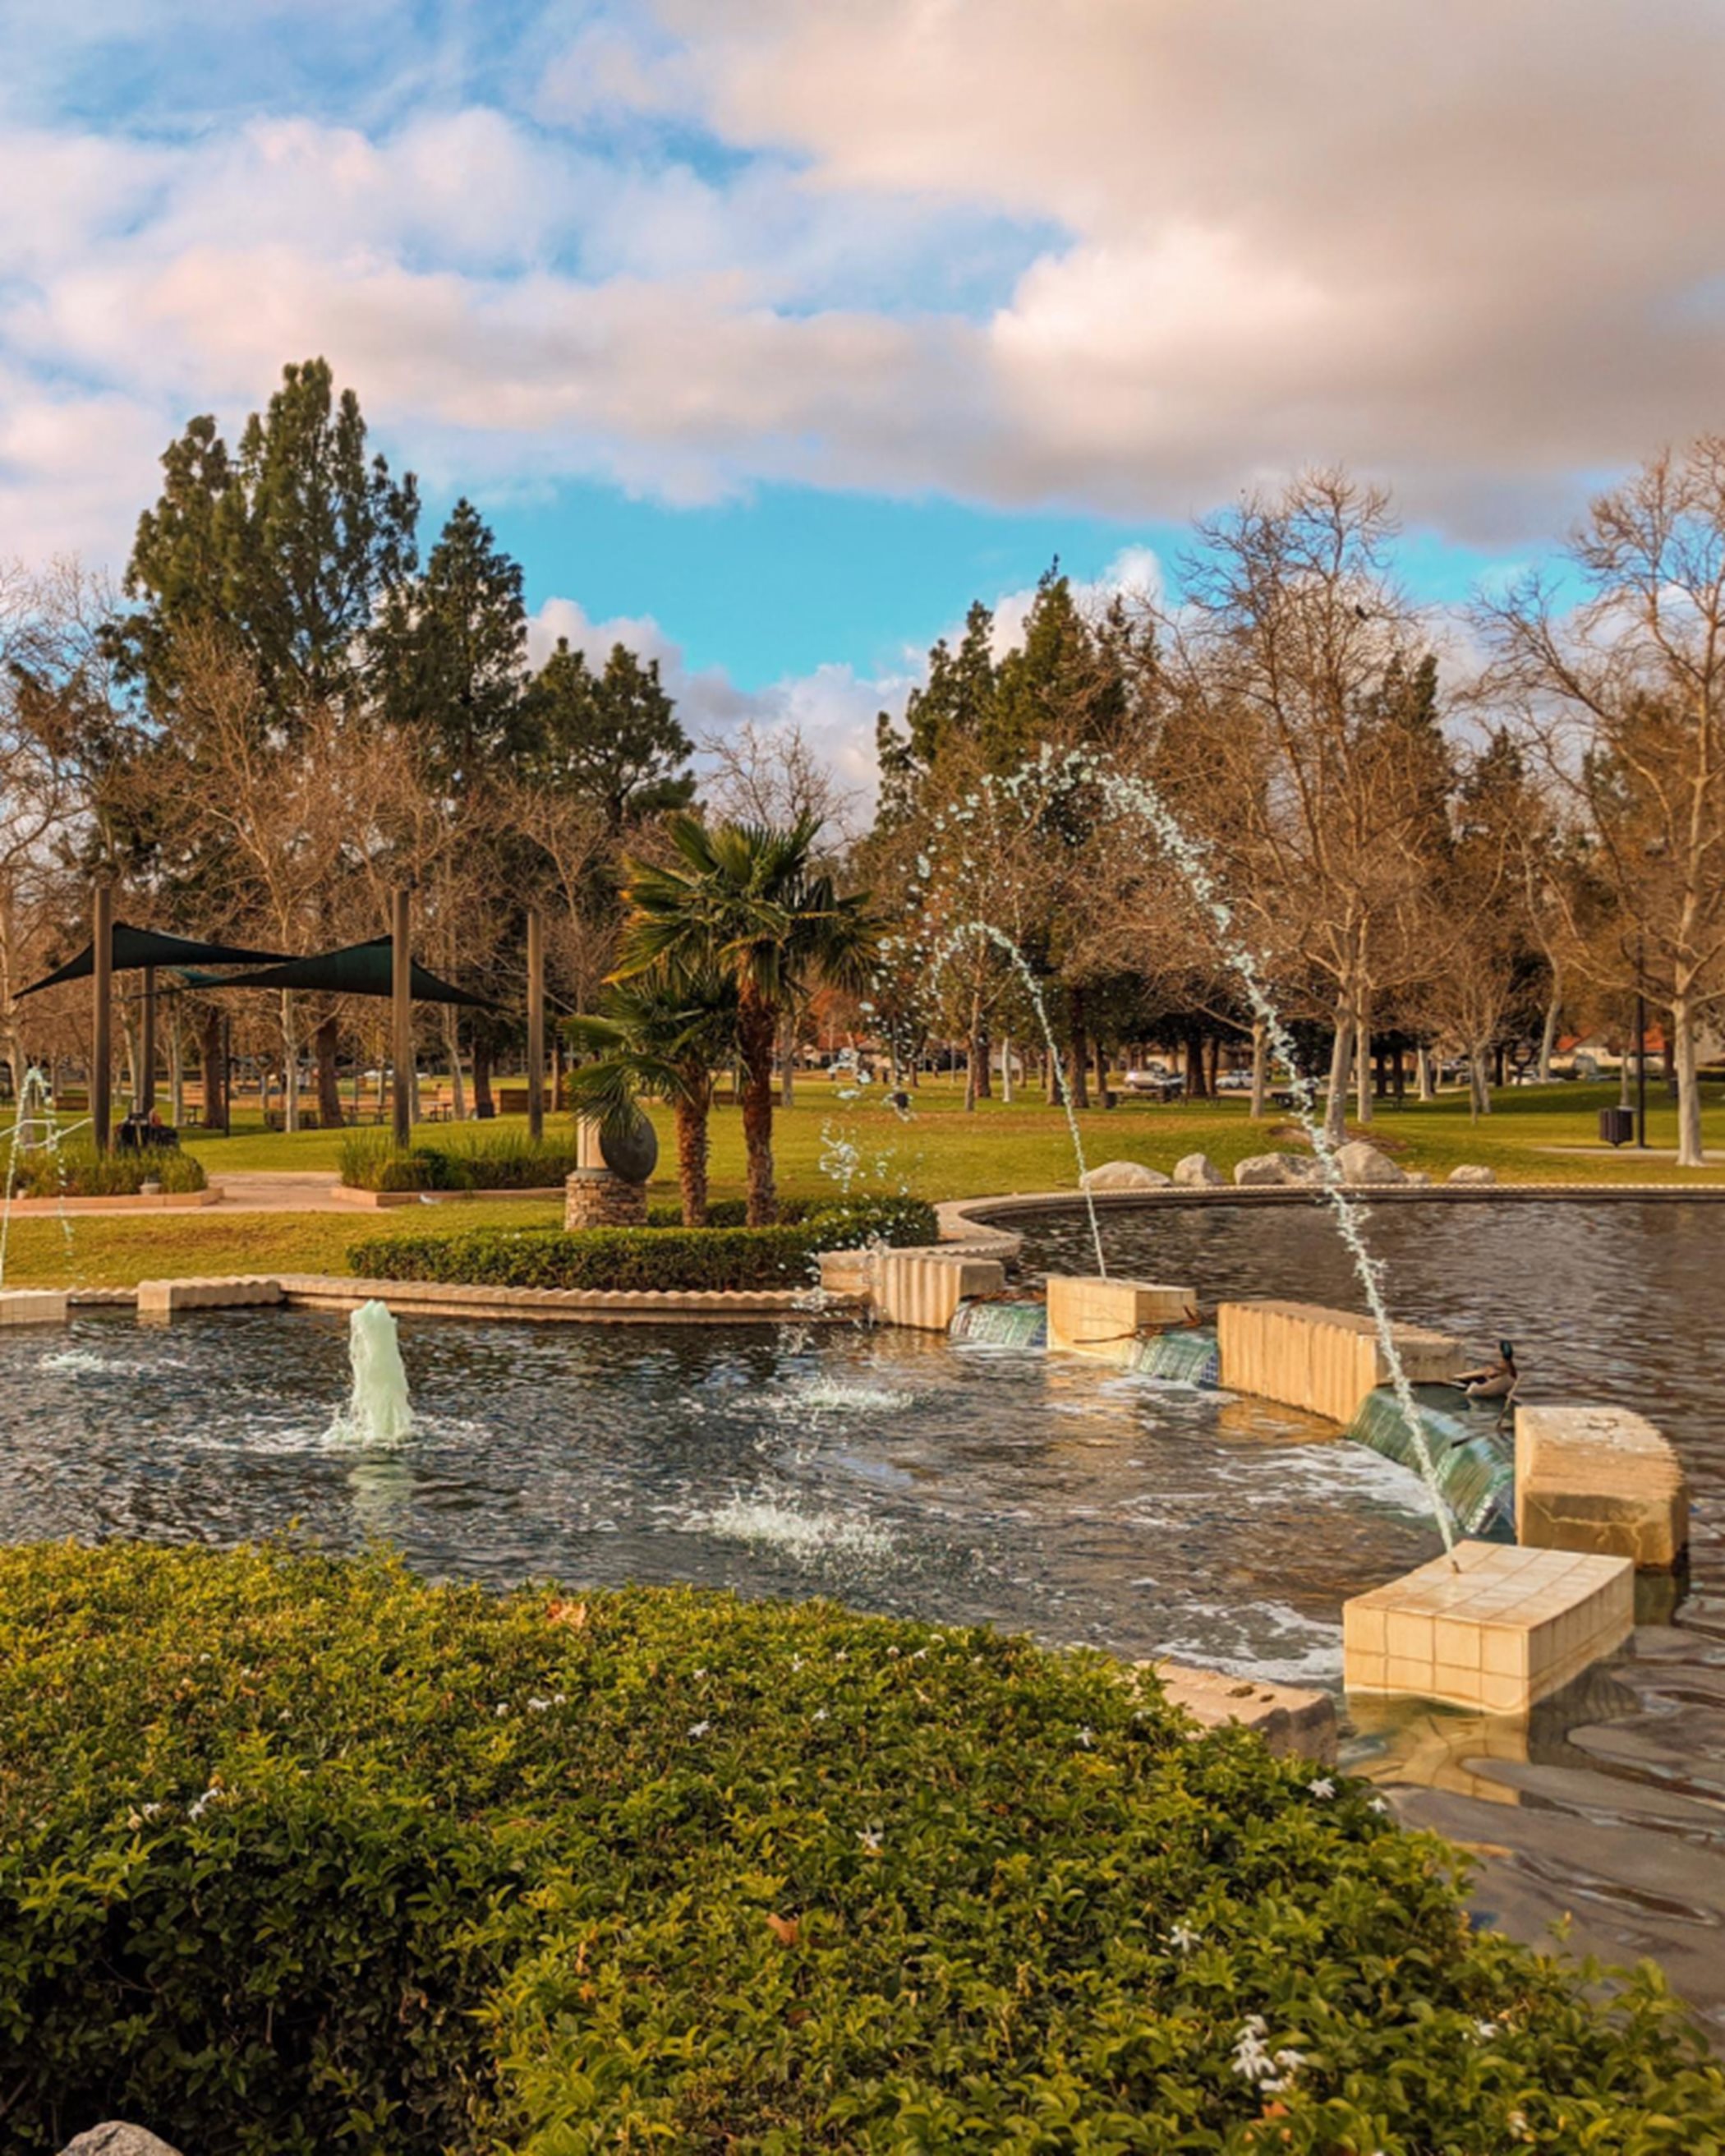 Rancho Simi Community Park